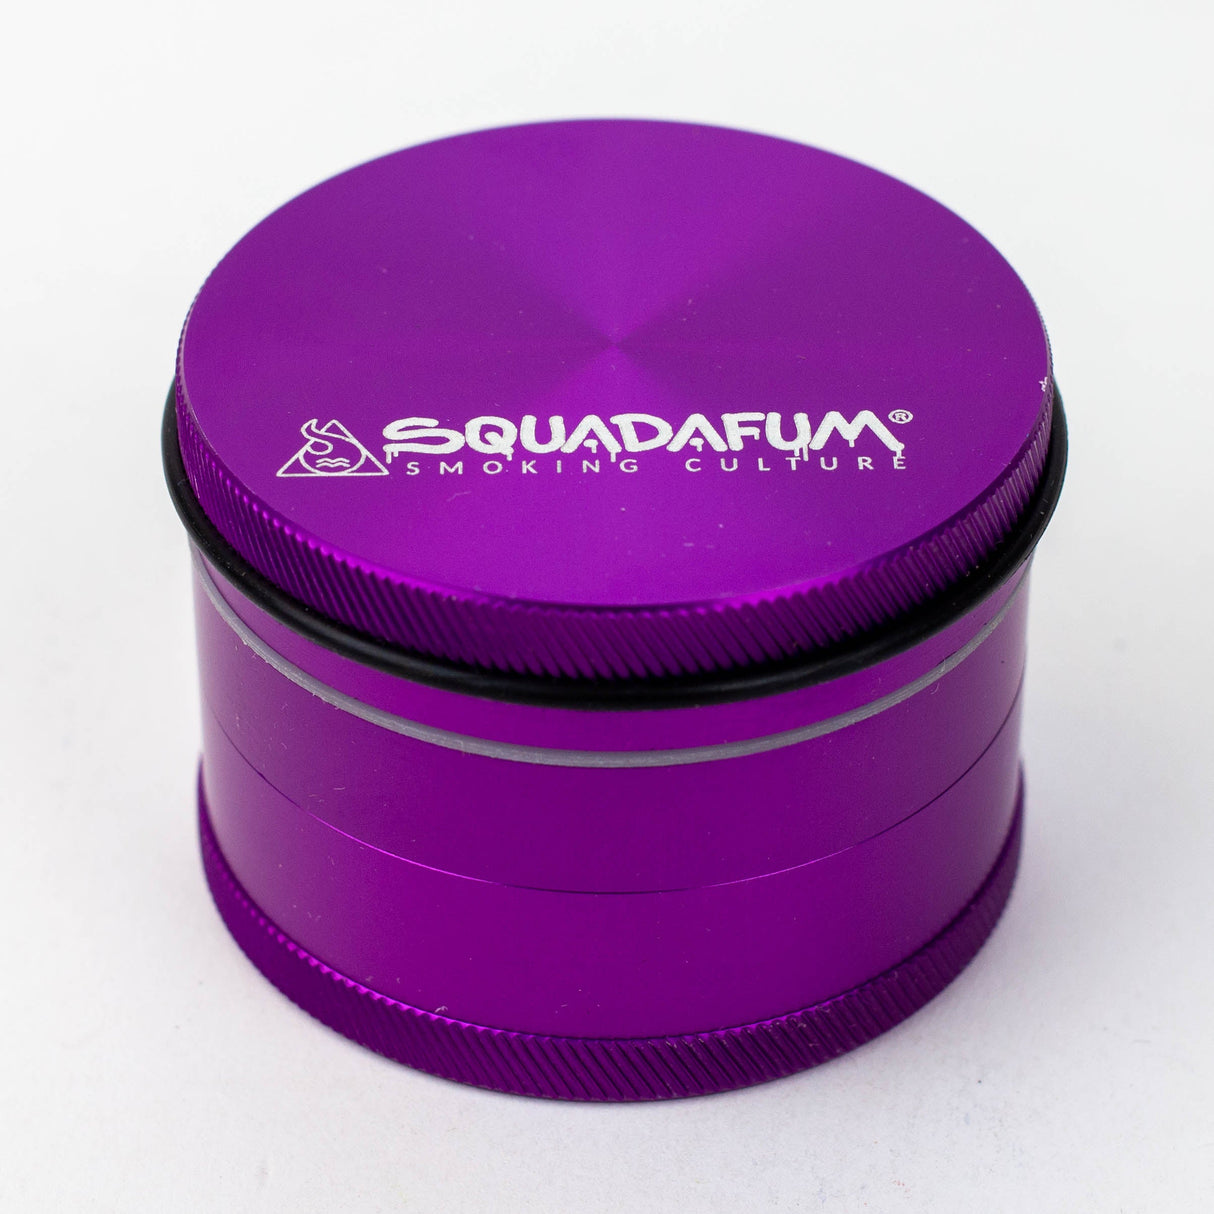 Squadafum - High Grinder 51mm 4 Pieces-Purple - One Wholesale